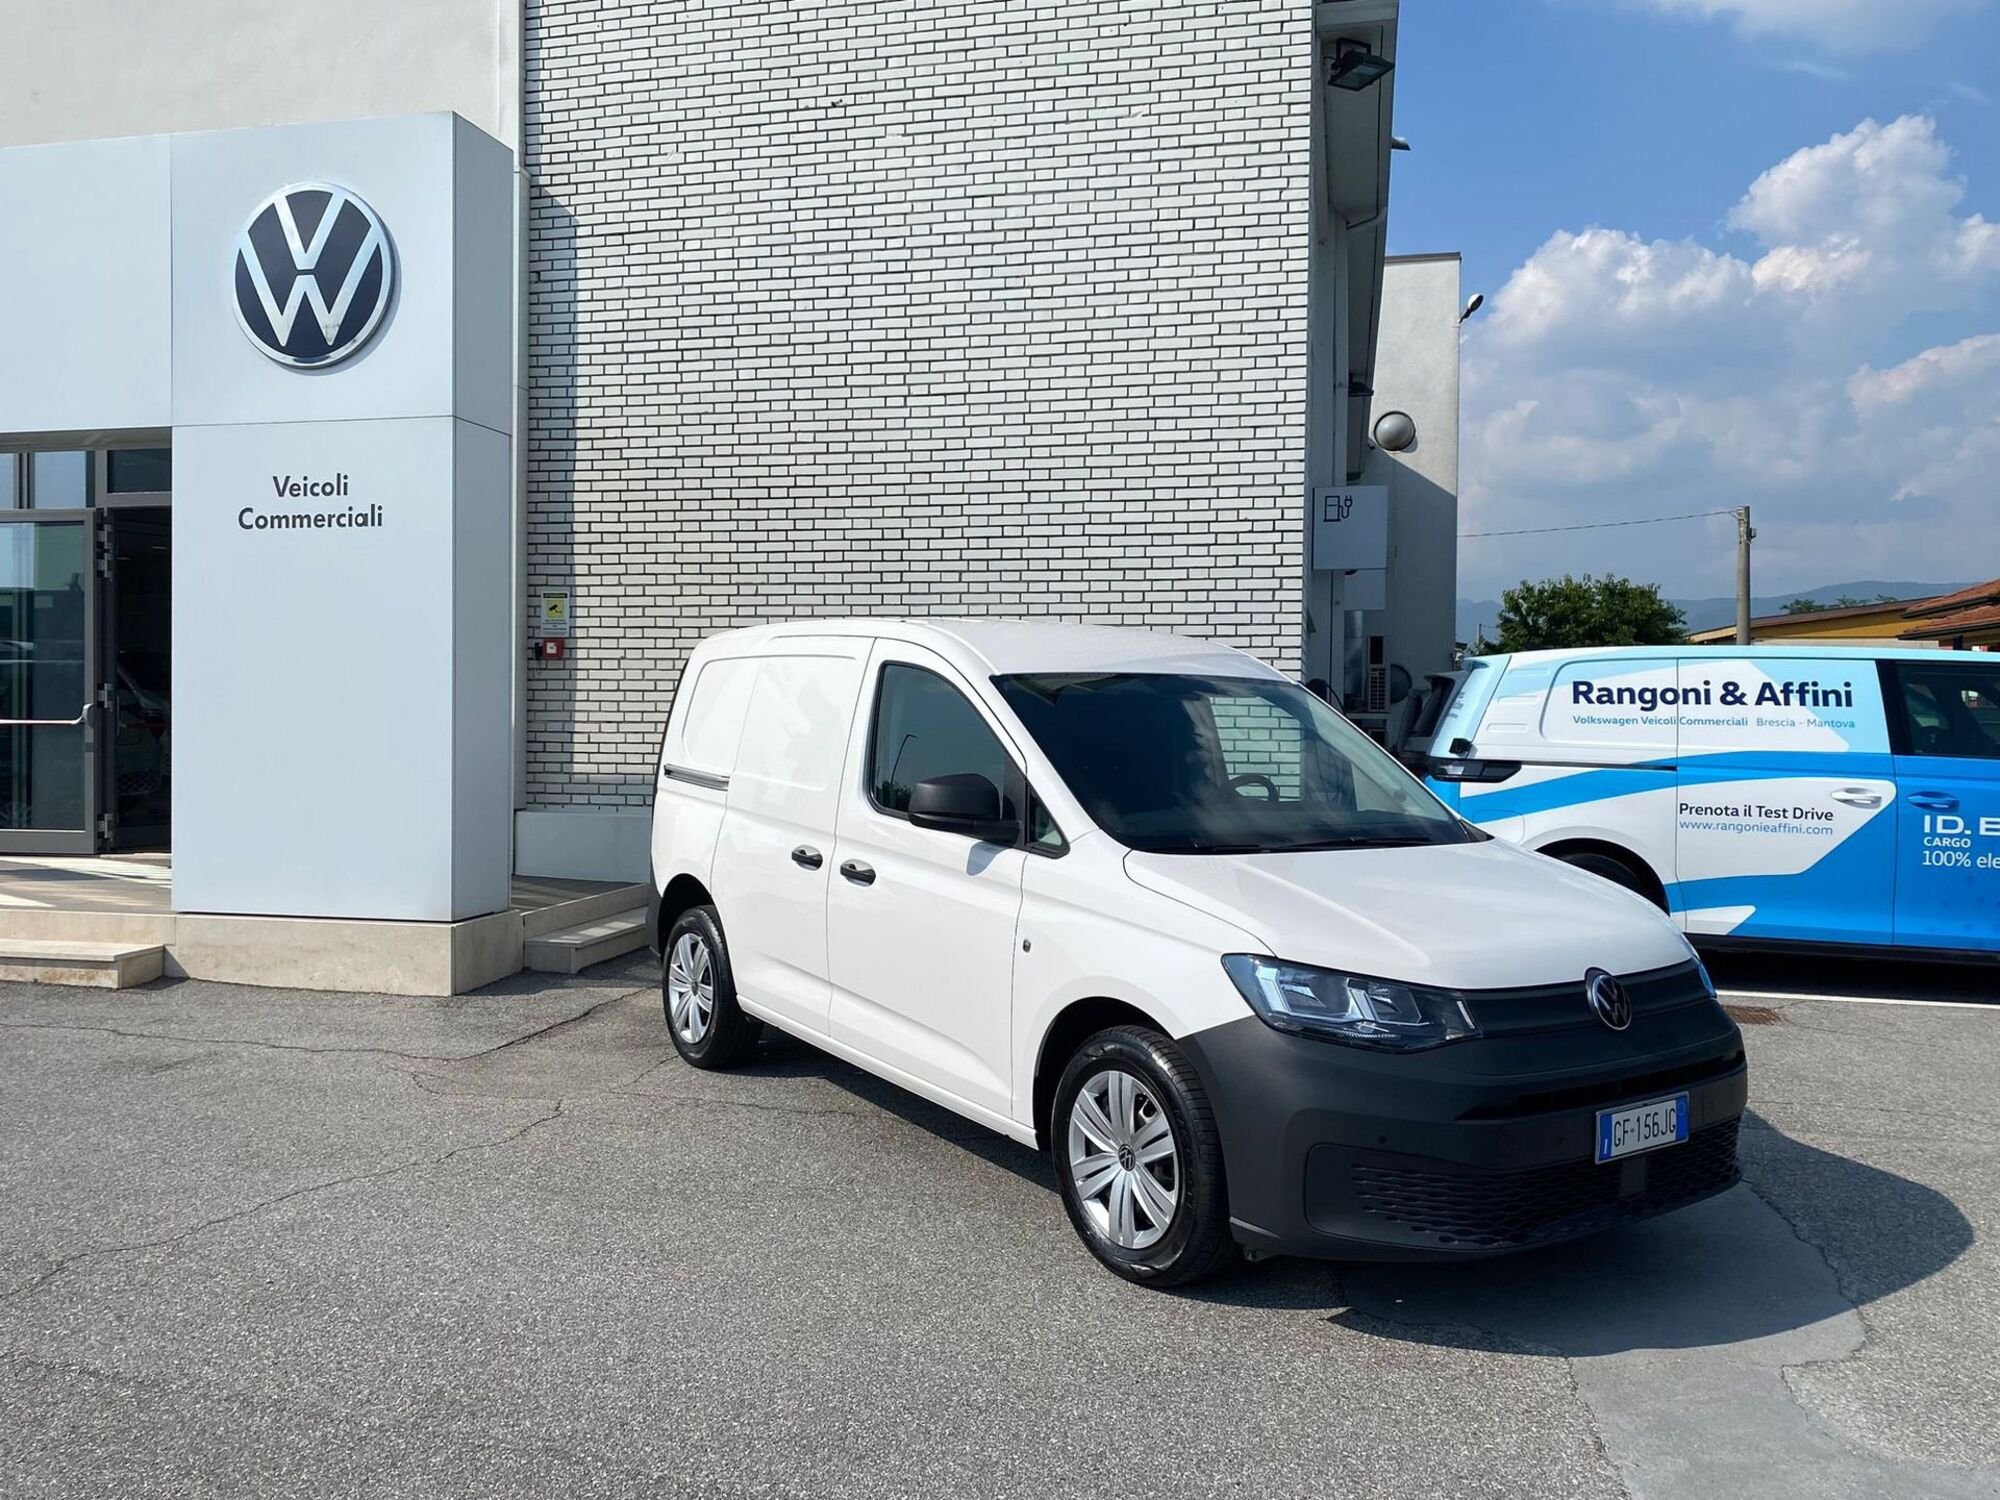 Volkswagen Veicoli Commerciali Caddy 2.0 TDI Furgone Business 